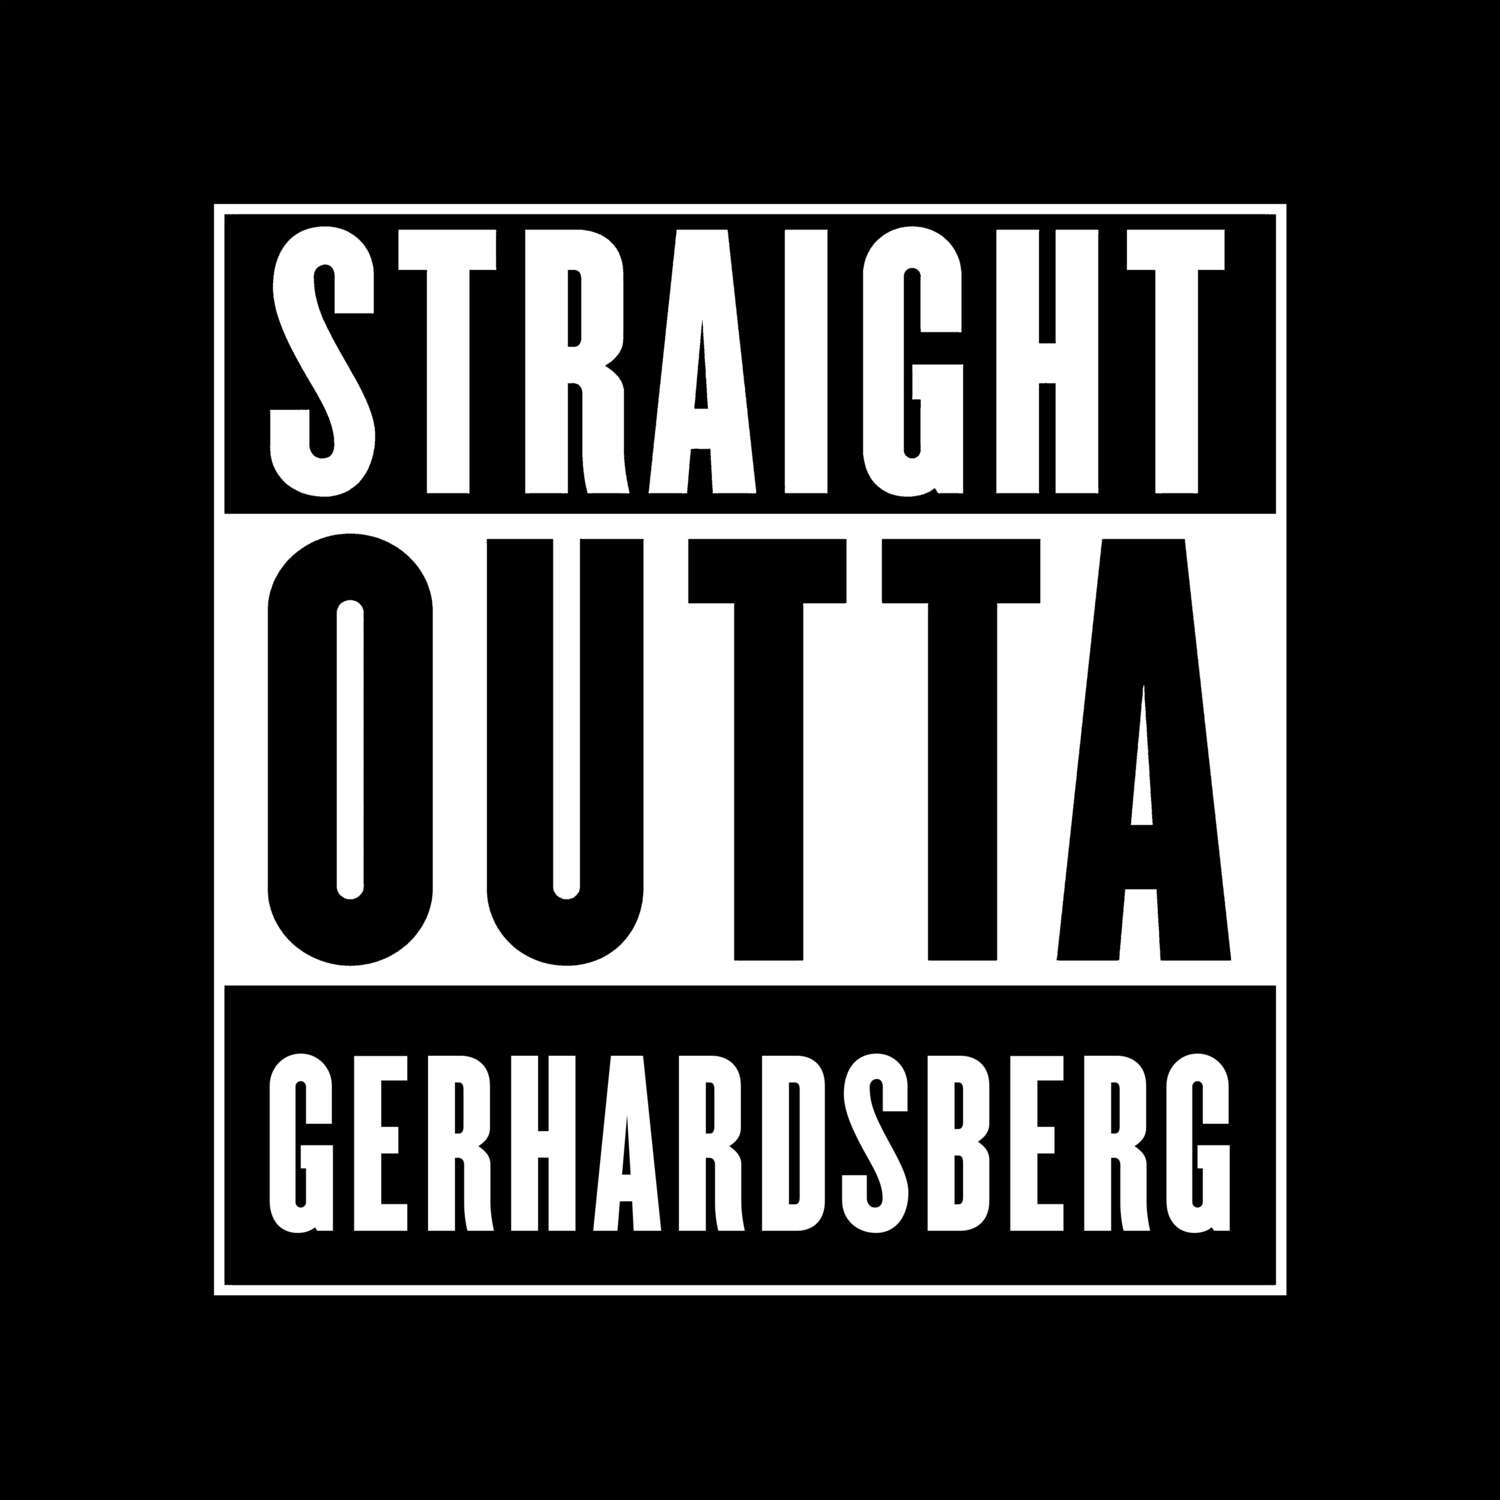 Gerhardsberg T-Shirt »Straight Outta«